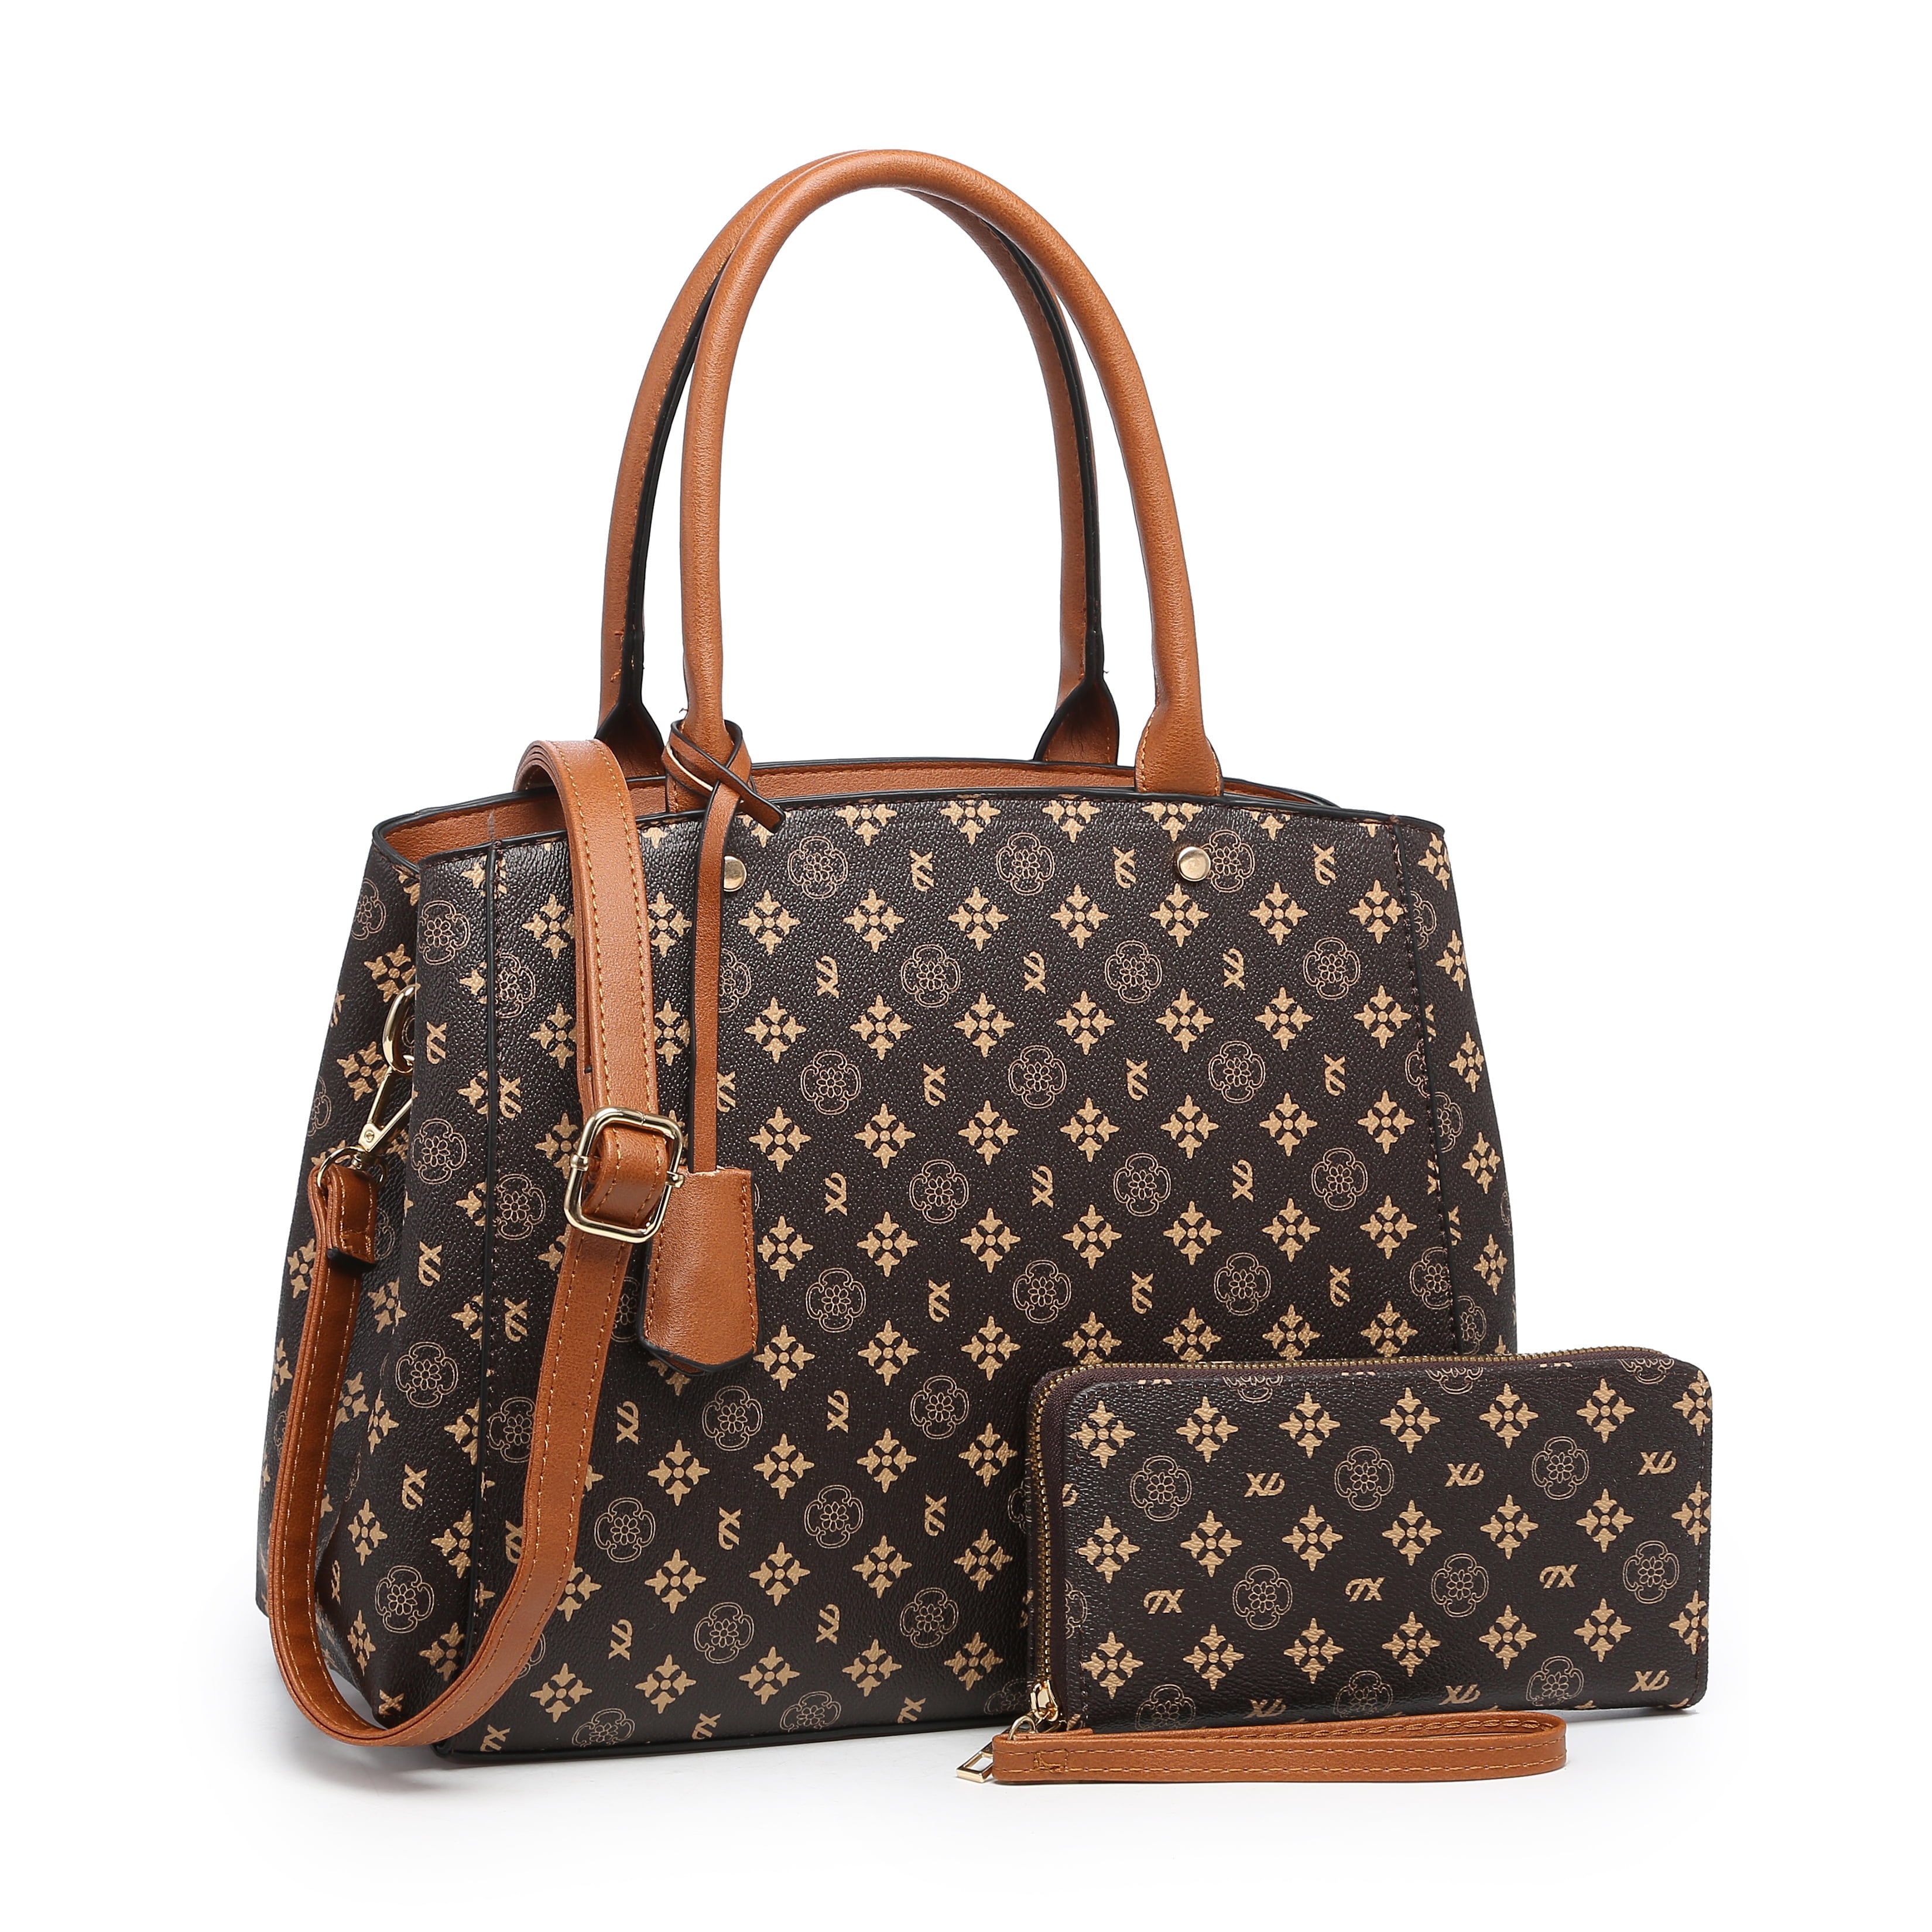 Women Top Handle Bags Faux Leather Handbag Fashionable Crossbody